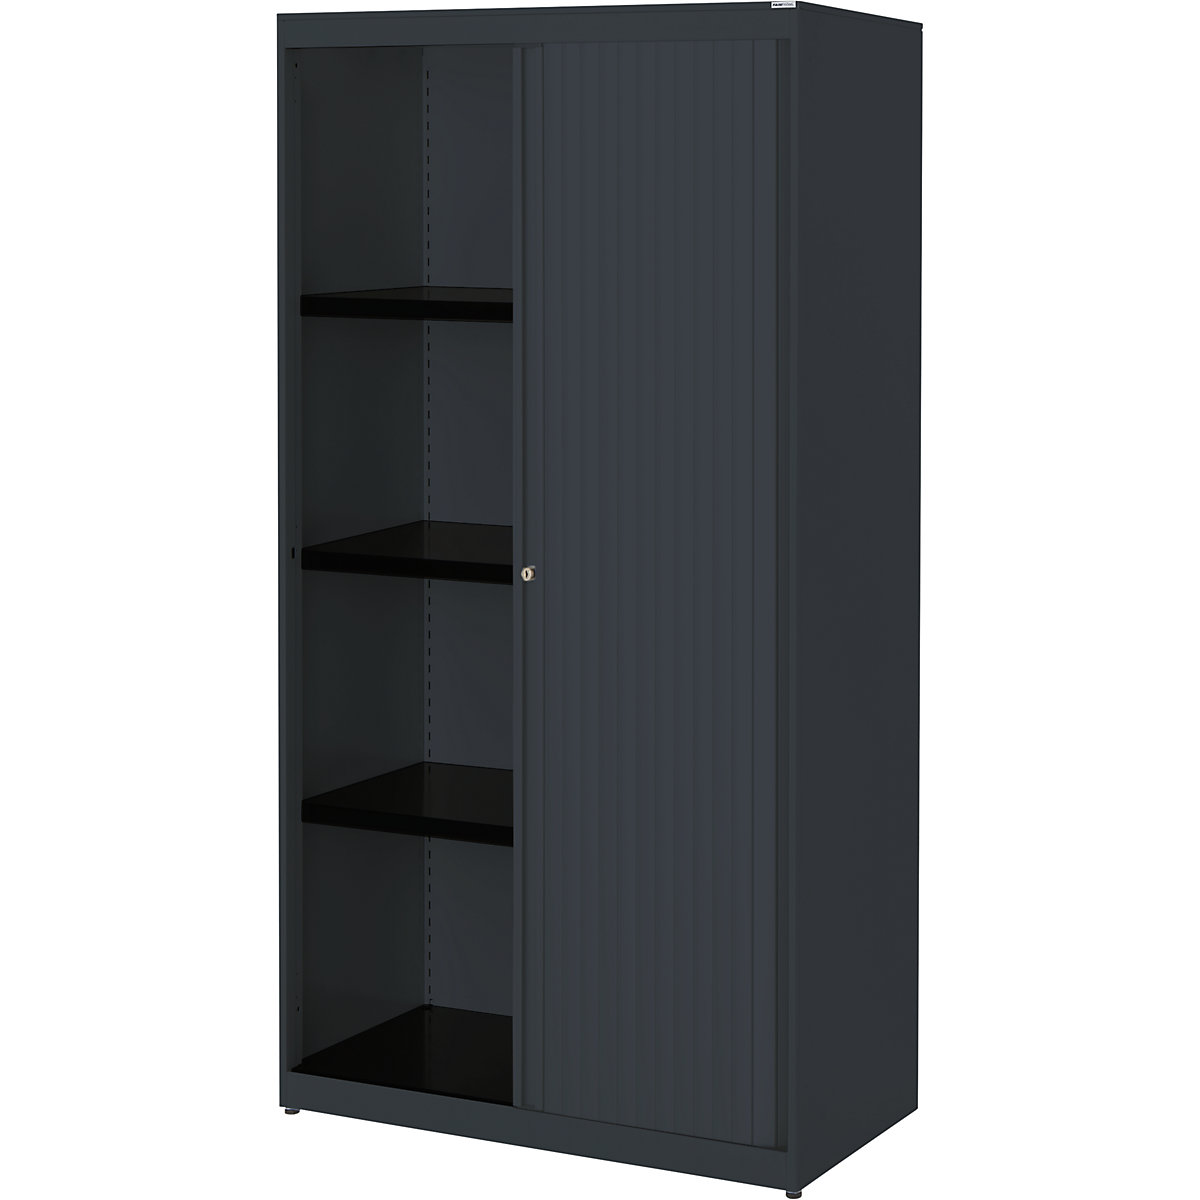 Horizontal roller shutter cupboard – mauser, HxWxD 1516 x 800 x 432 mm, steel plate, 3 shelves, charcoal / charcoal / charcoal-2